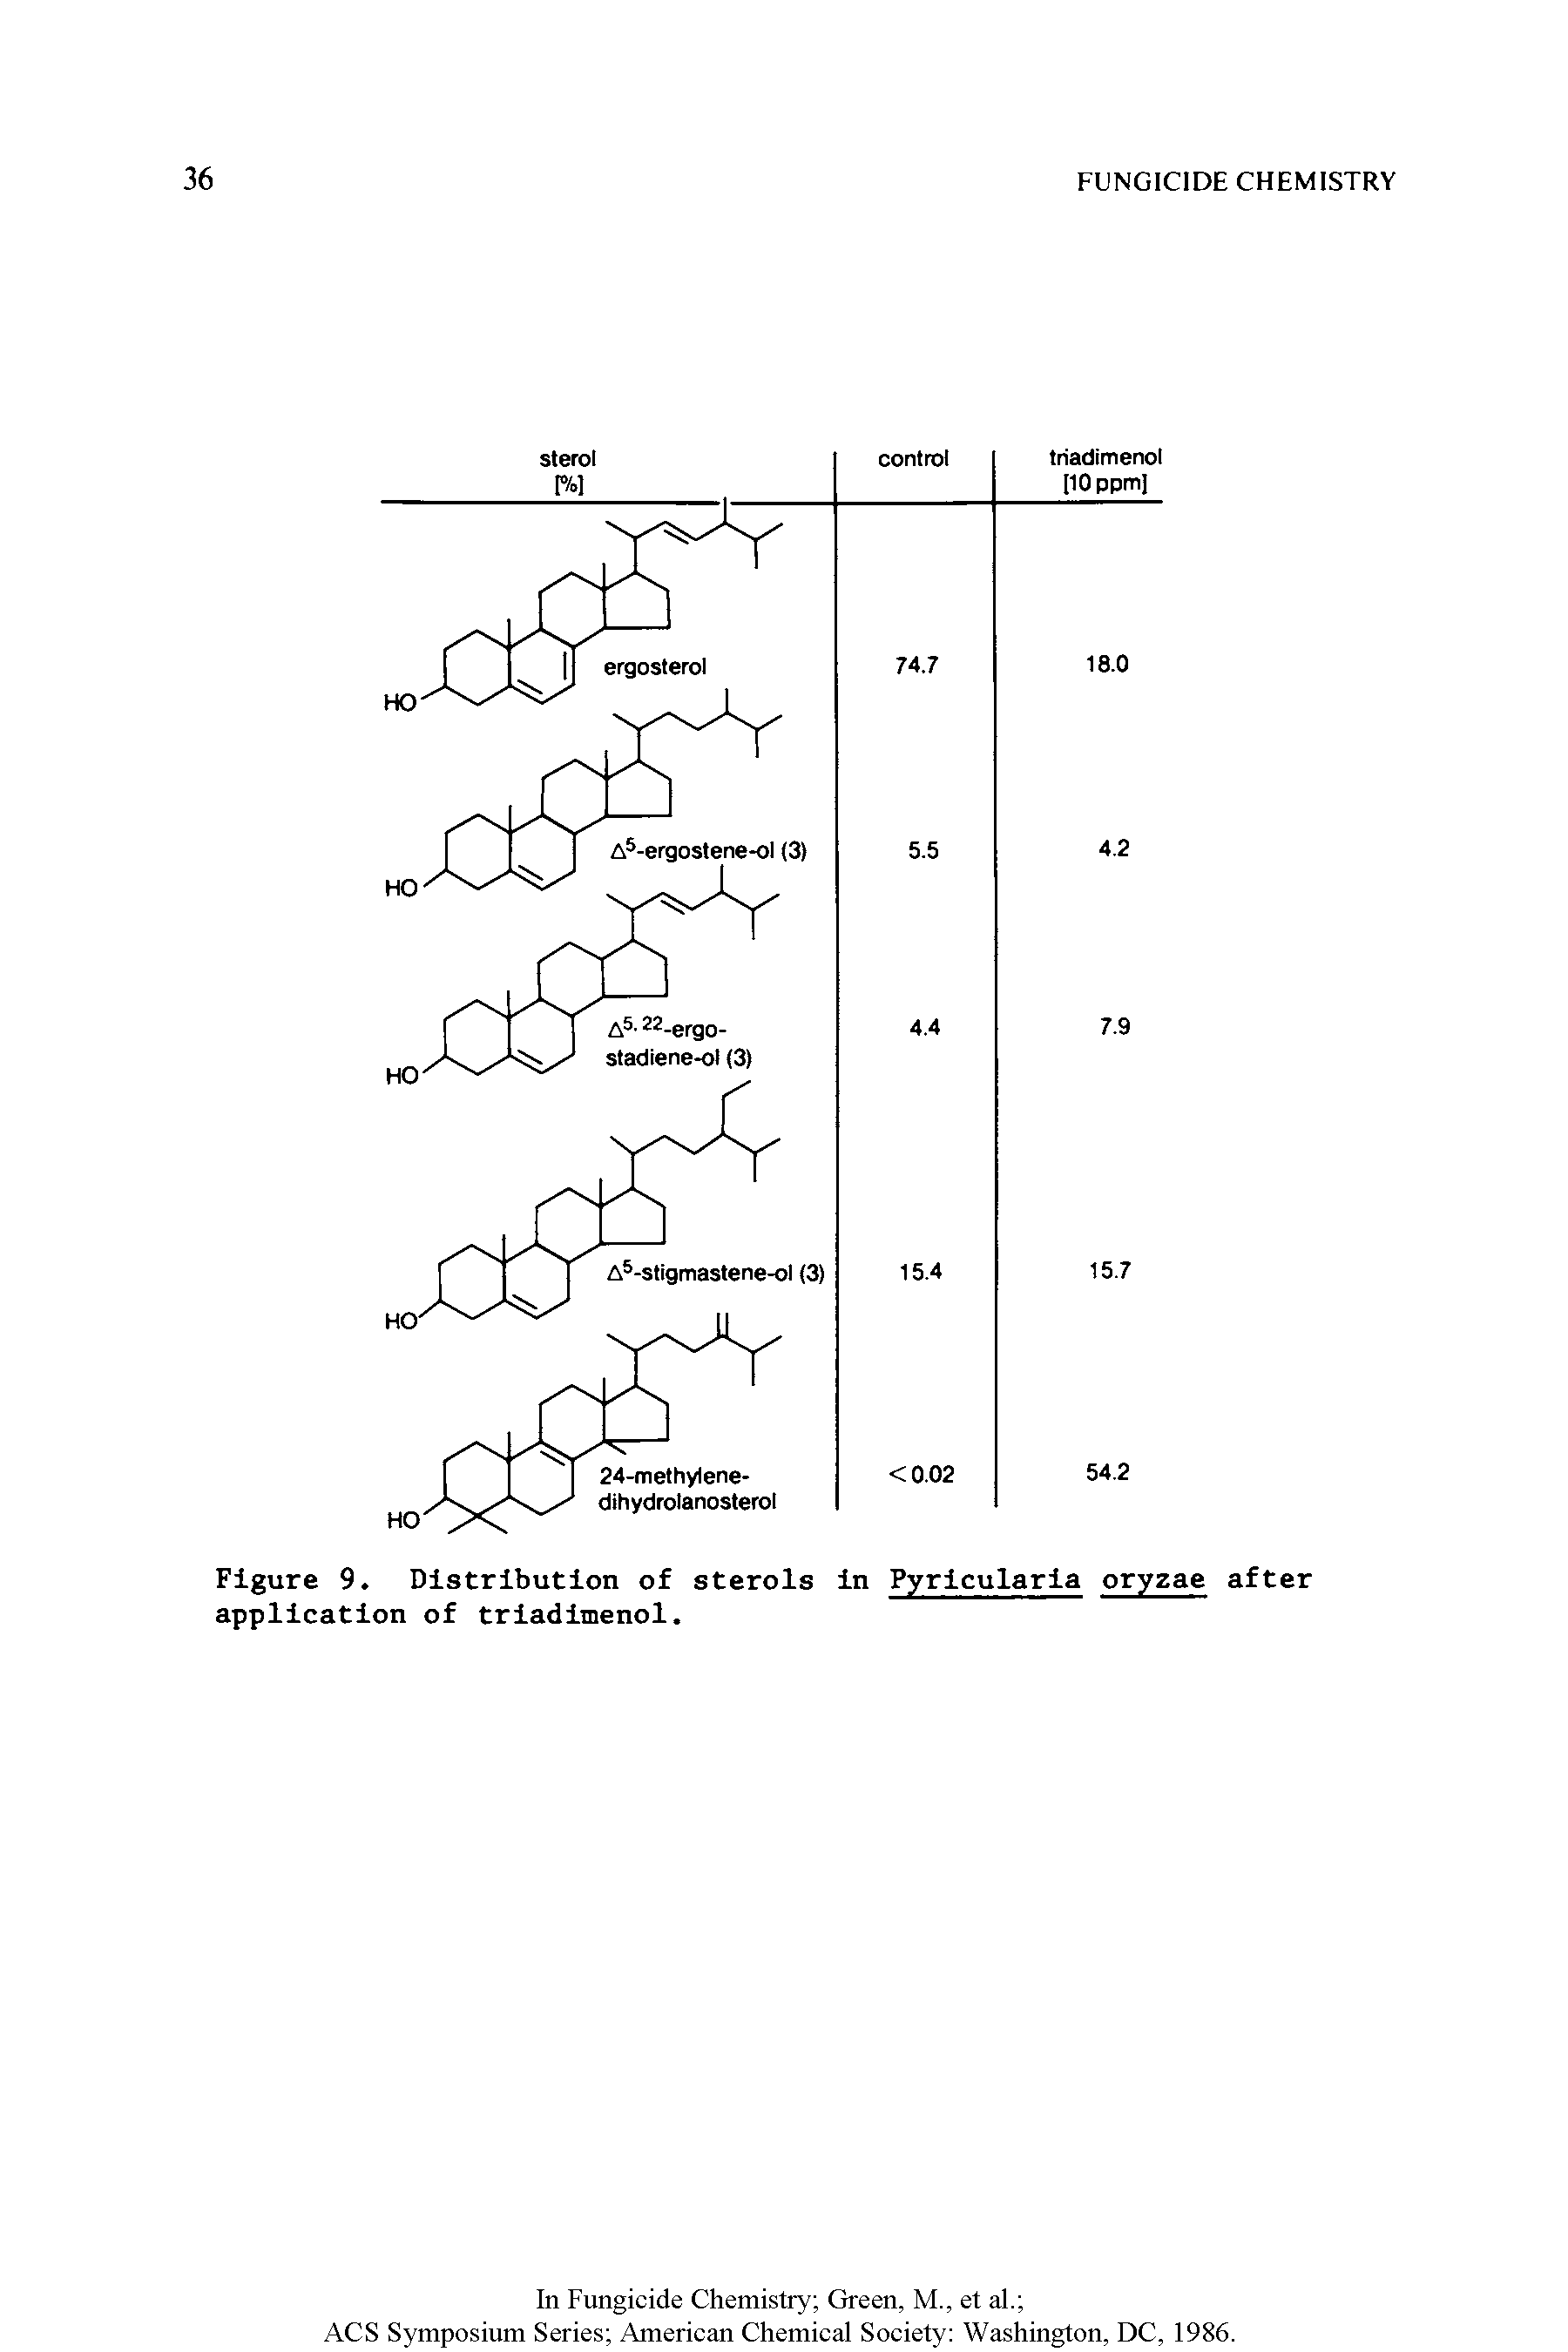 Figure 9. Distribution of sterols in Pyricularia oryzae after application of triadimenol.